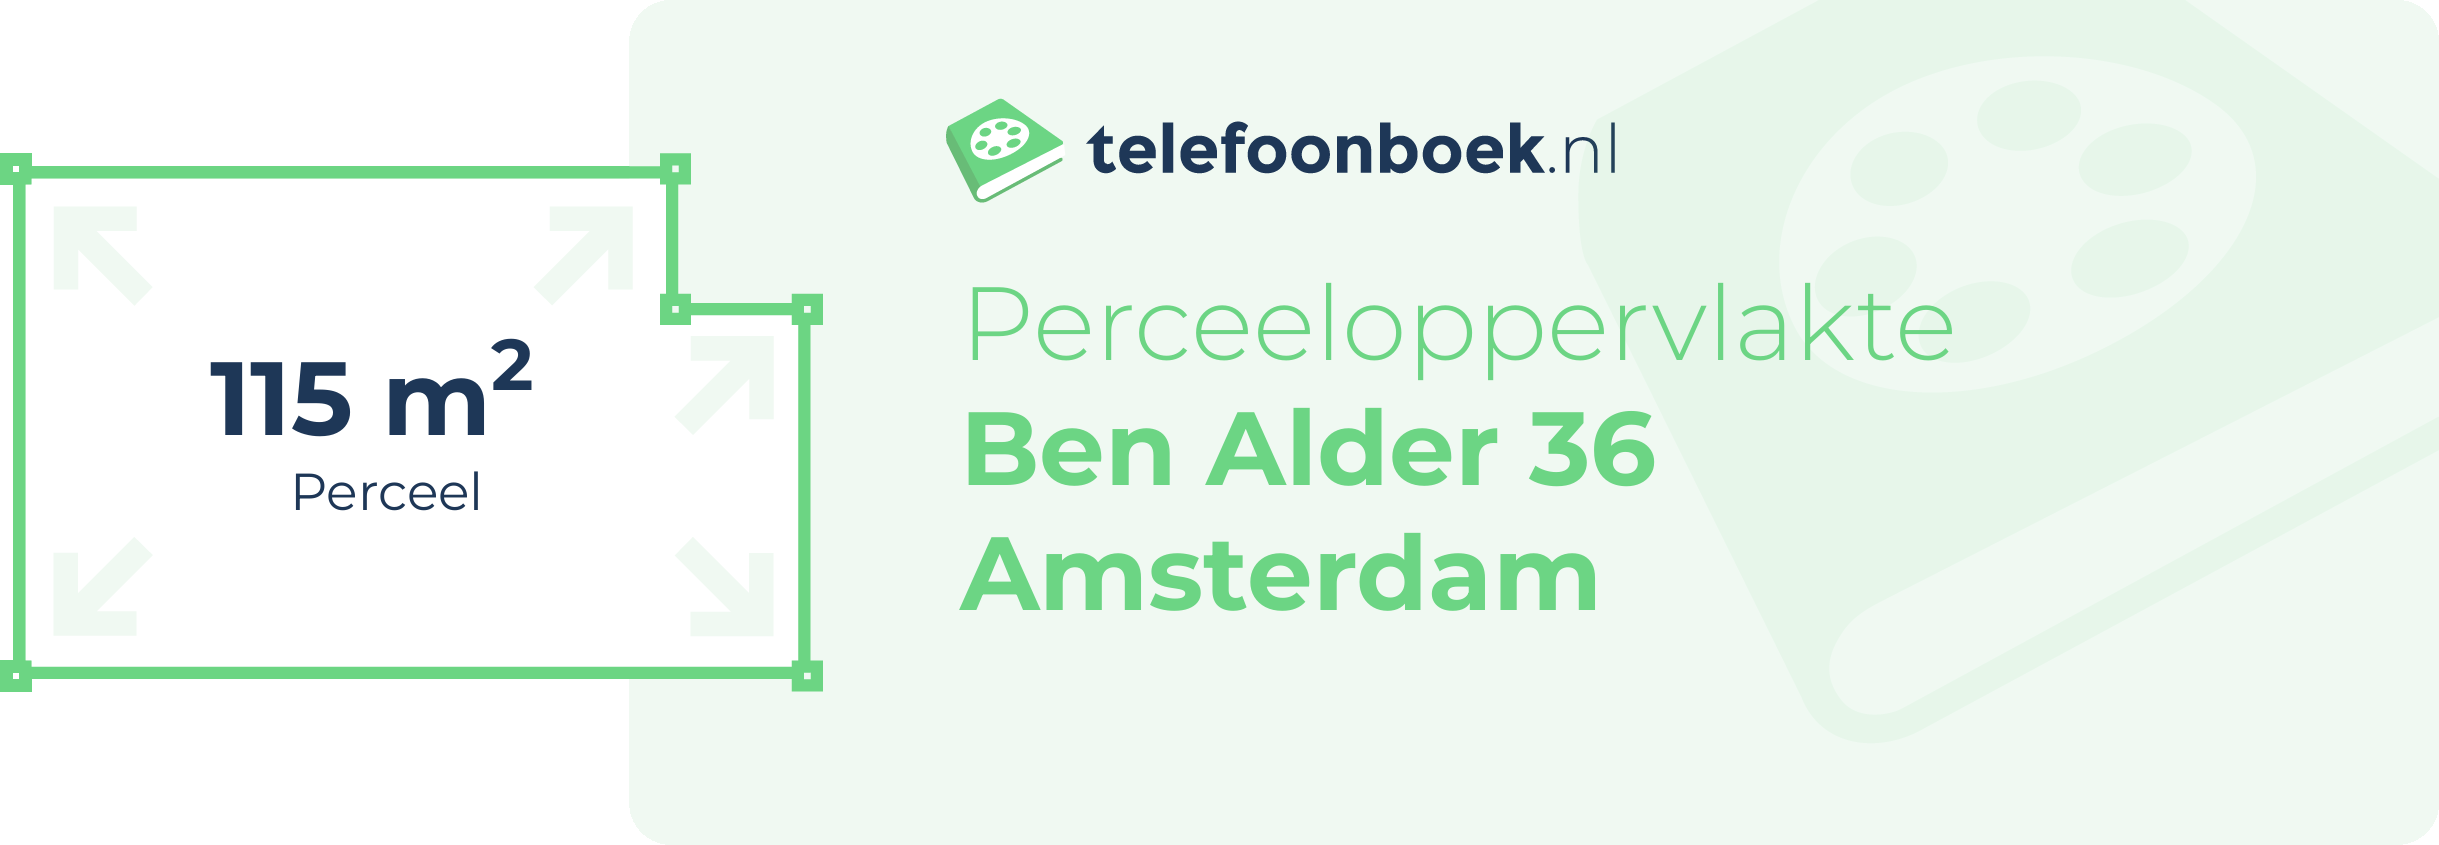 Perceeloppervlakte Ben Alder 36 Amsterdam